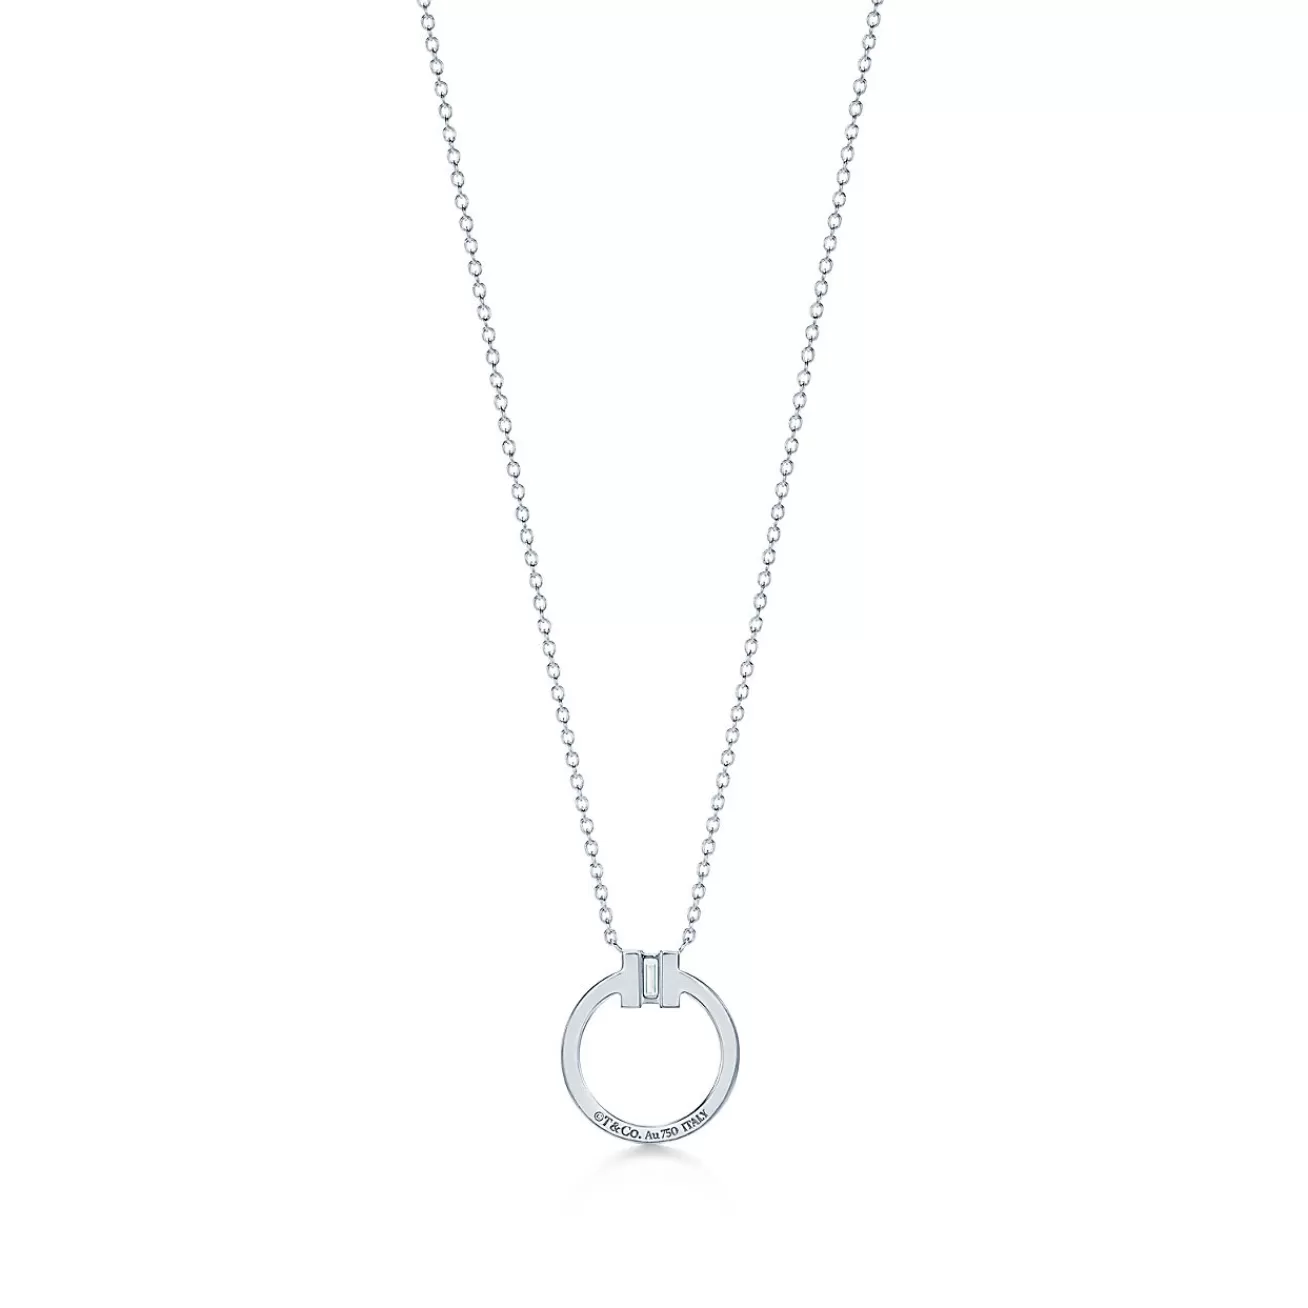 Tiffany & Co. Tiffany T diamond pendant in 18k white gold with a baguette diamond. | ^ Necklaces & Pendants | Diamond Jewelry